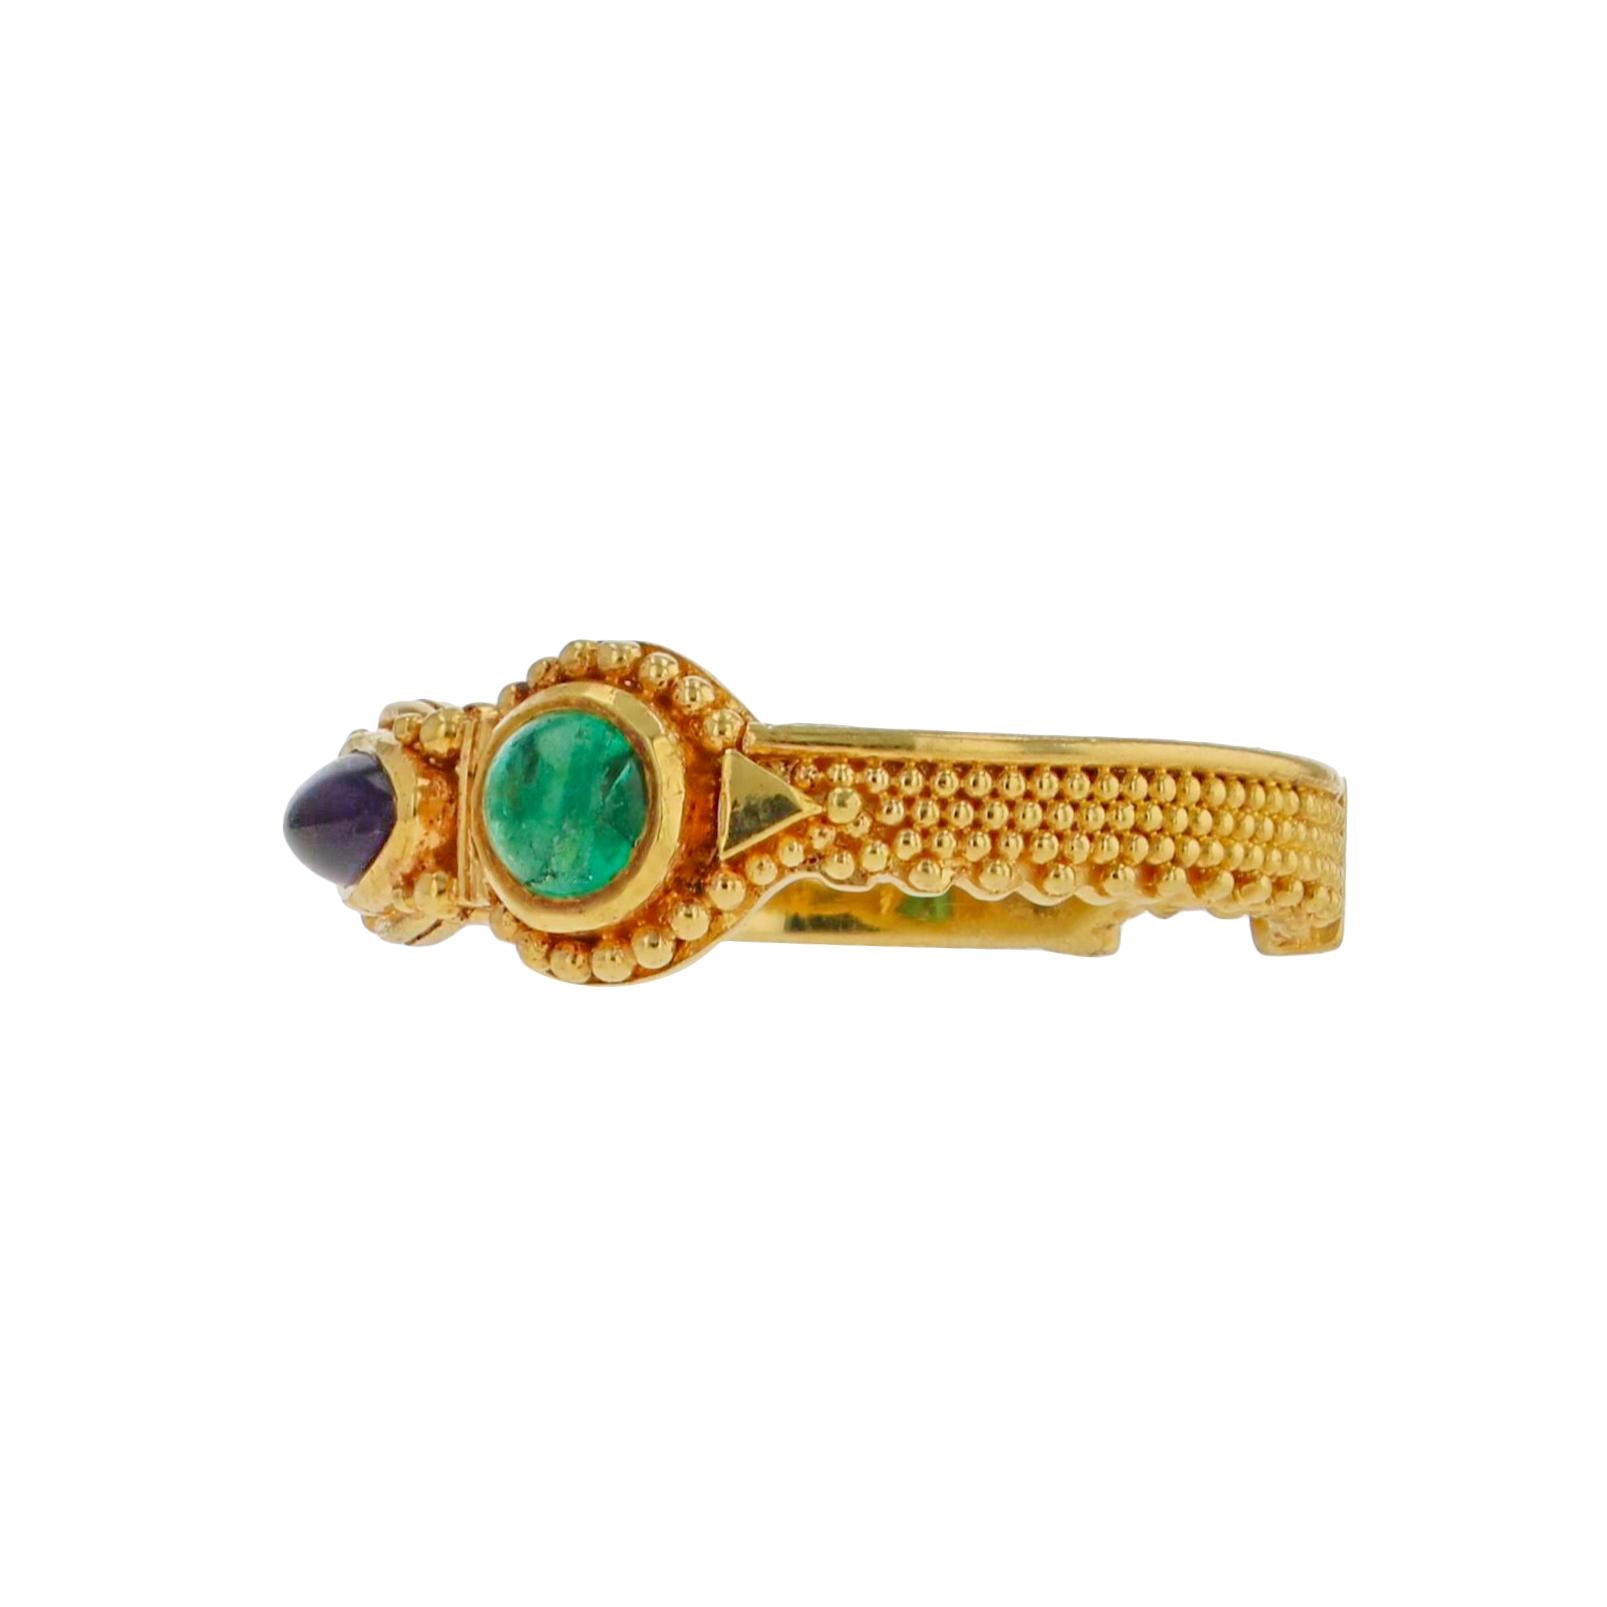 Artisan Kent Raible 18 Karat Gold Emerald and Amethyst Ring with fine Gold Granulation